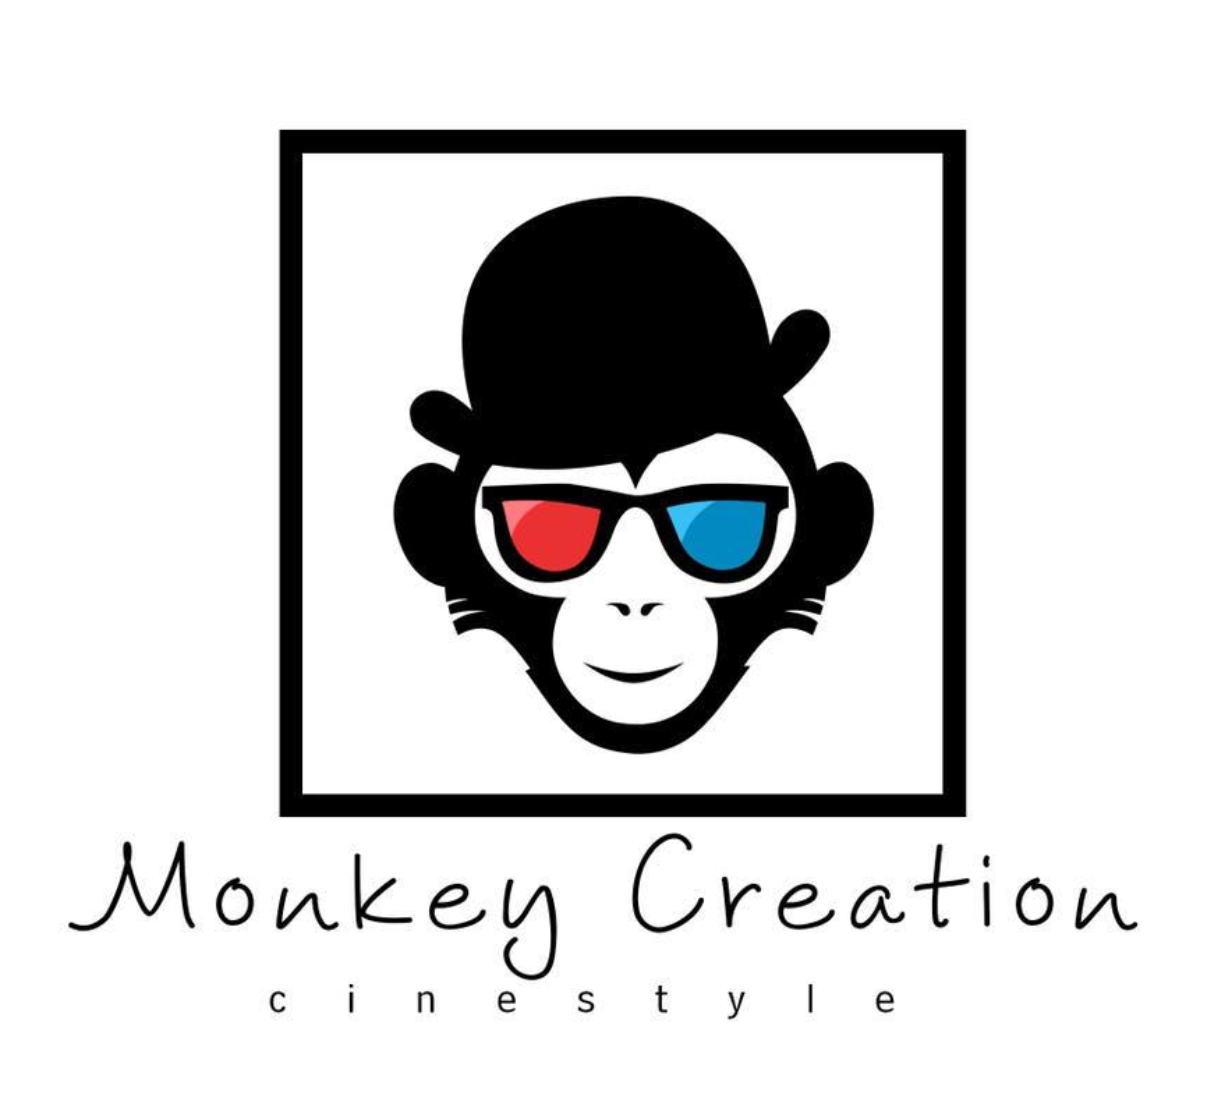 Monkey Creation